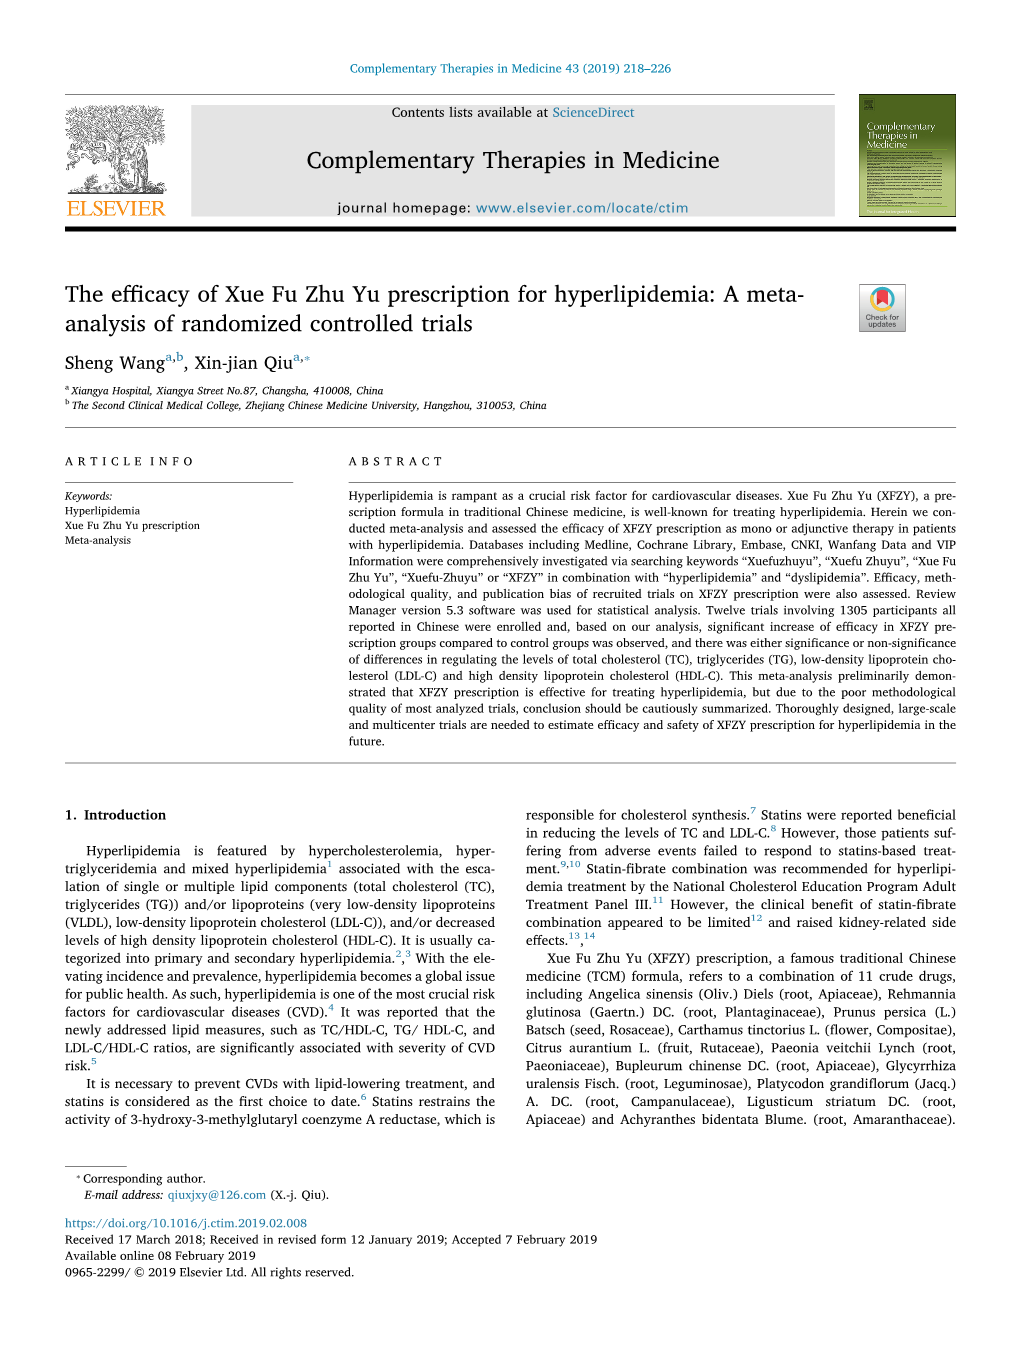 The Efficacy of Xue Fu Zhu Yu Prescription for Hyperlipidemia A